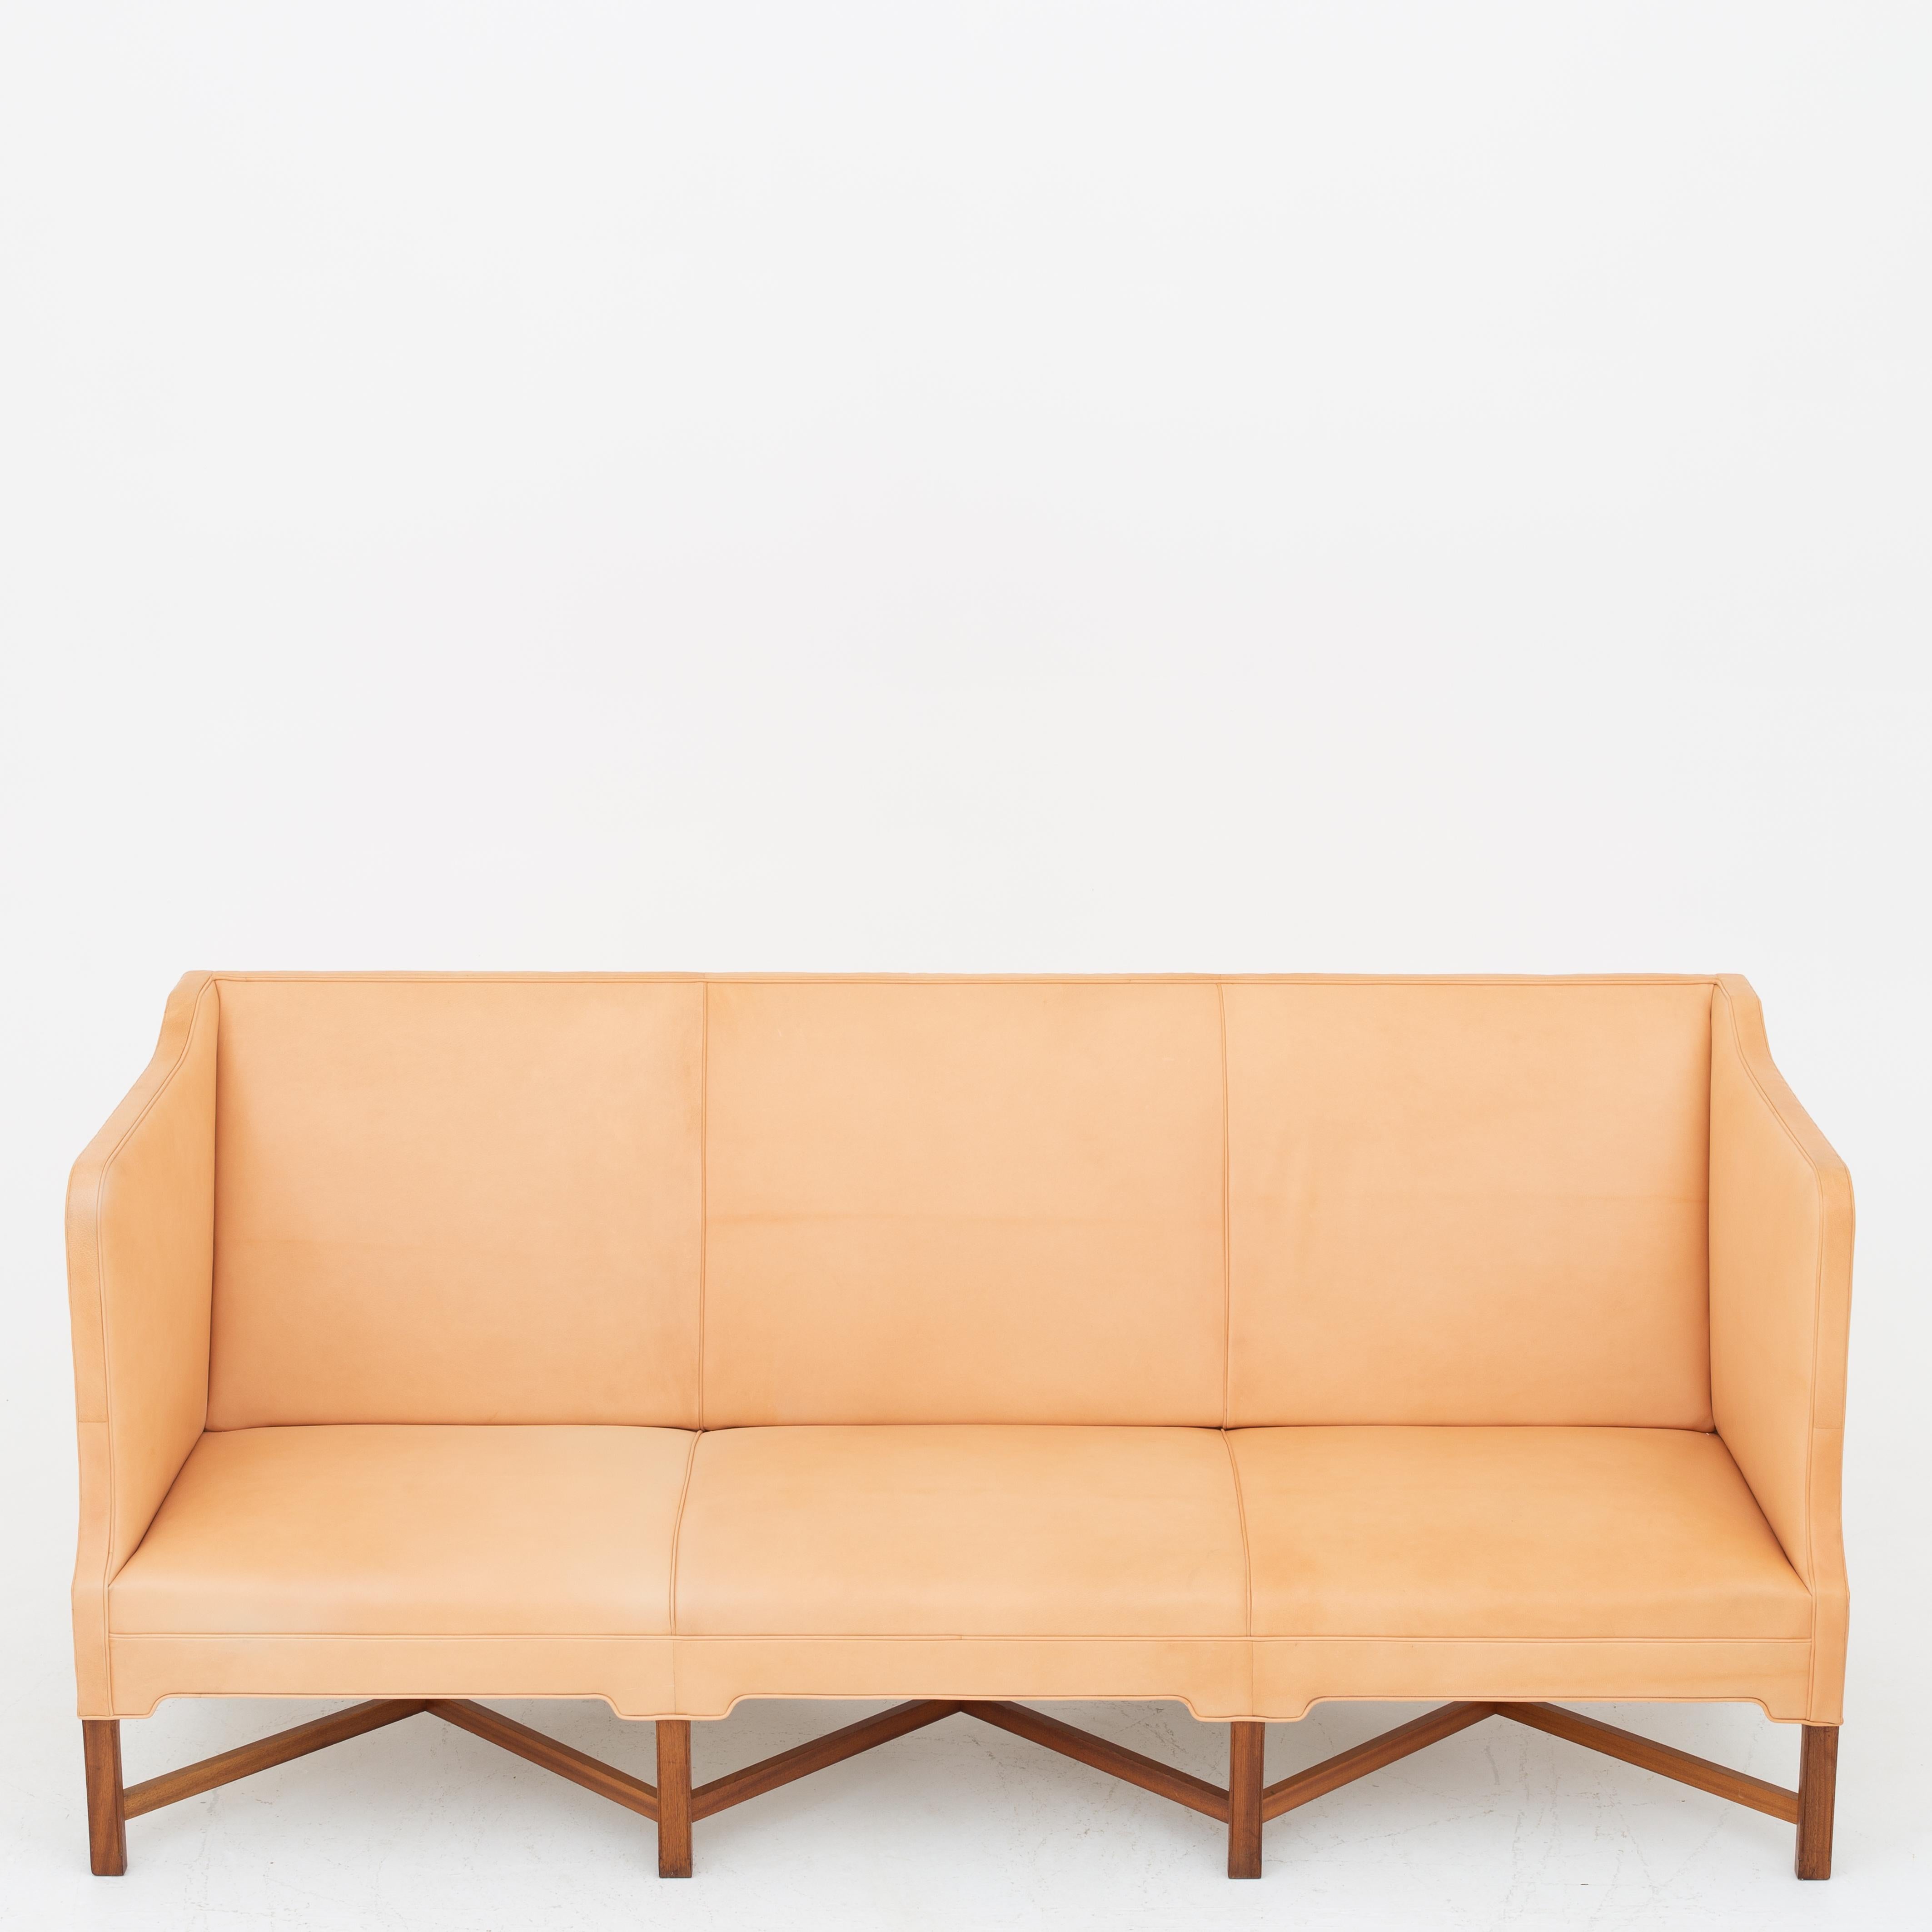 Mahogany KK 4118 3-Seat Sofa in Niger Leather by Kaare Klint